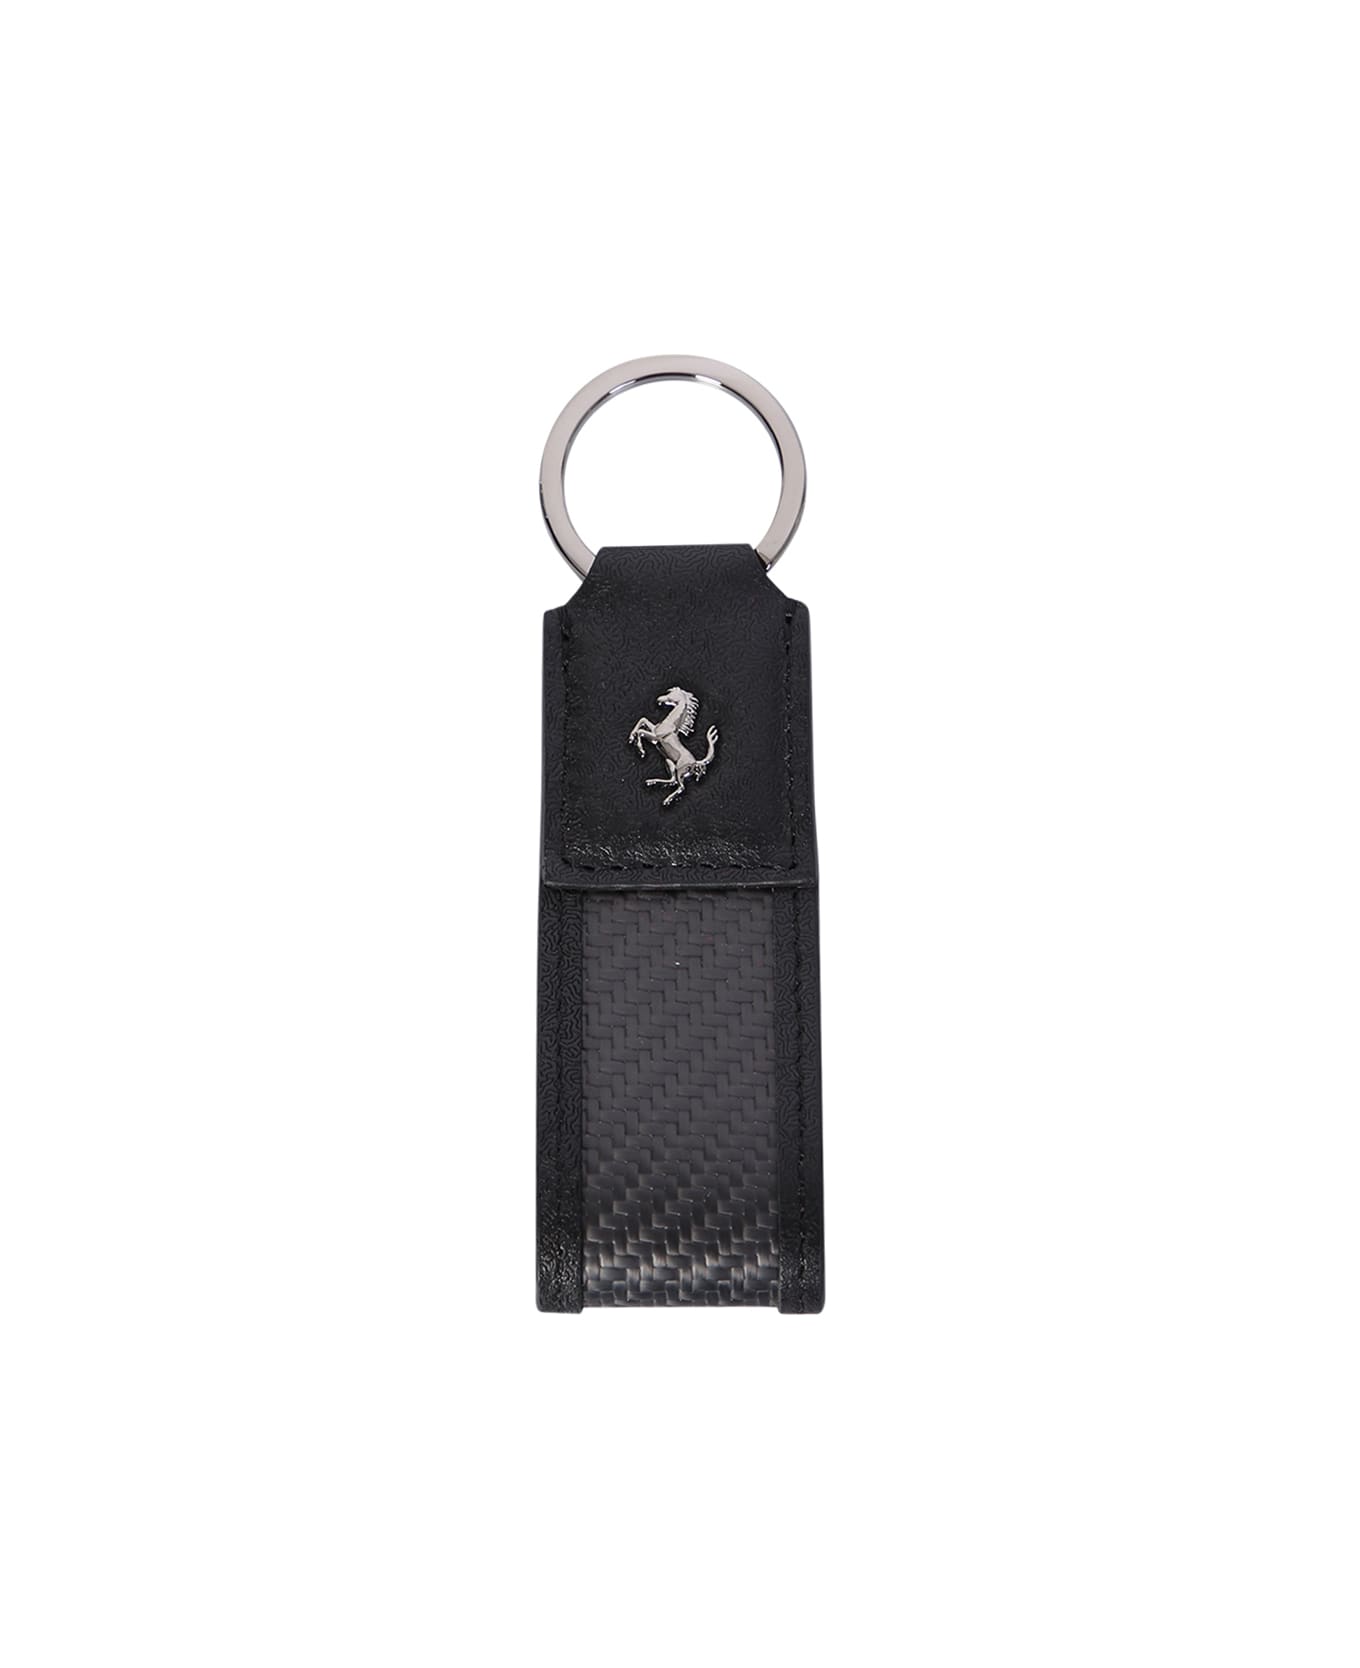 Ferrari Keychain With Prancing Horse - Black キーリング